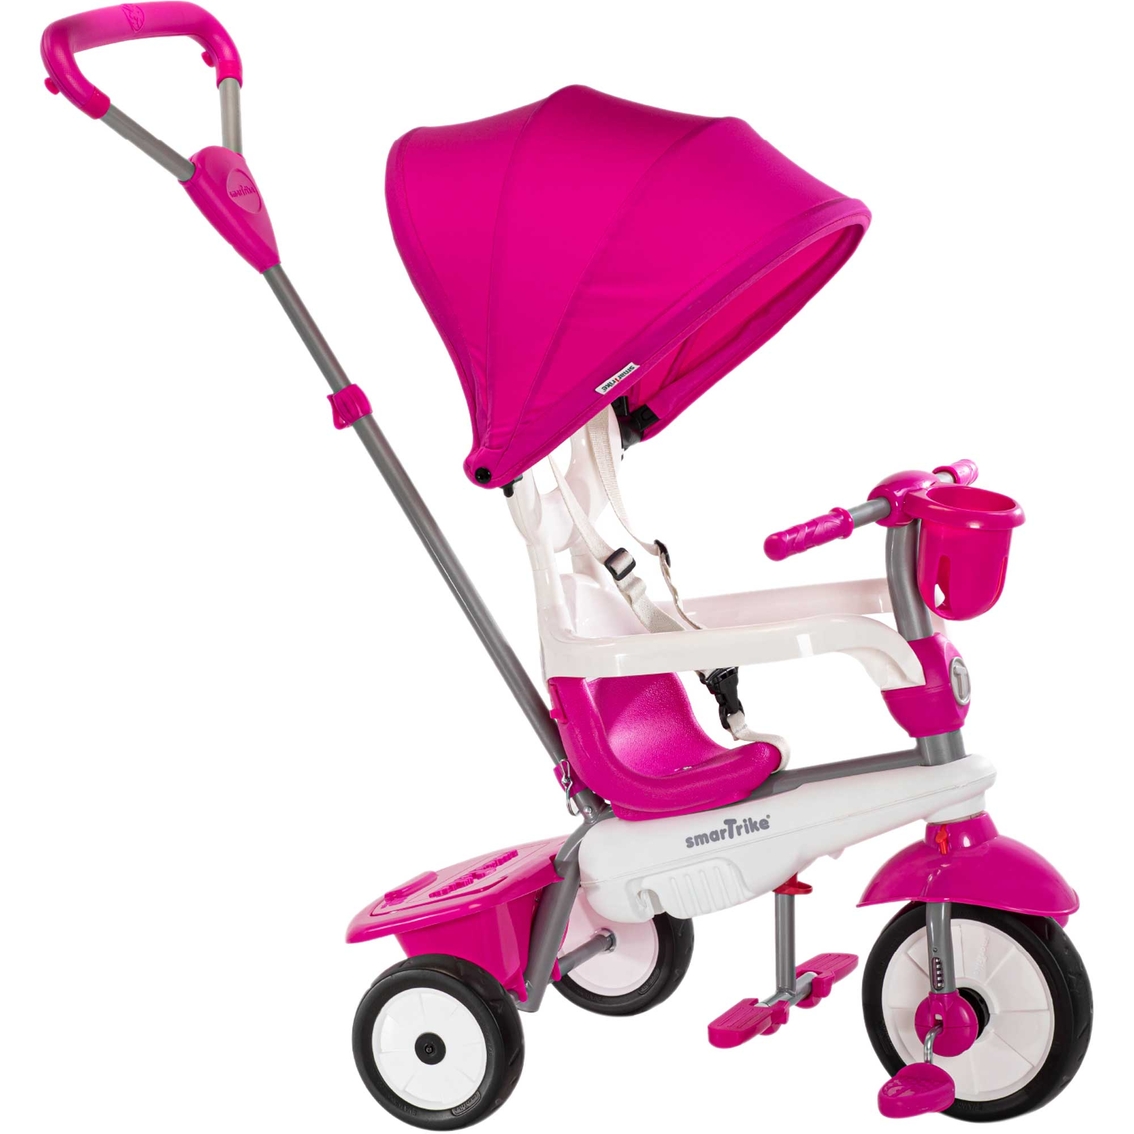 smarTrike Breeze Plus Kids Pink 4 in 1 Tricycle Push Bike - Image 1 of 6